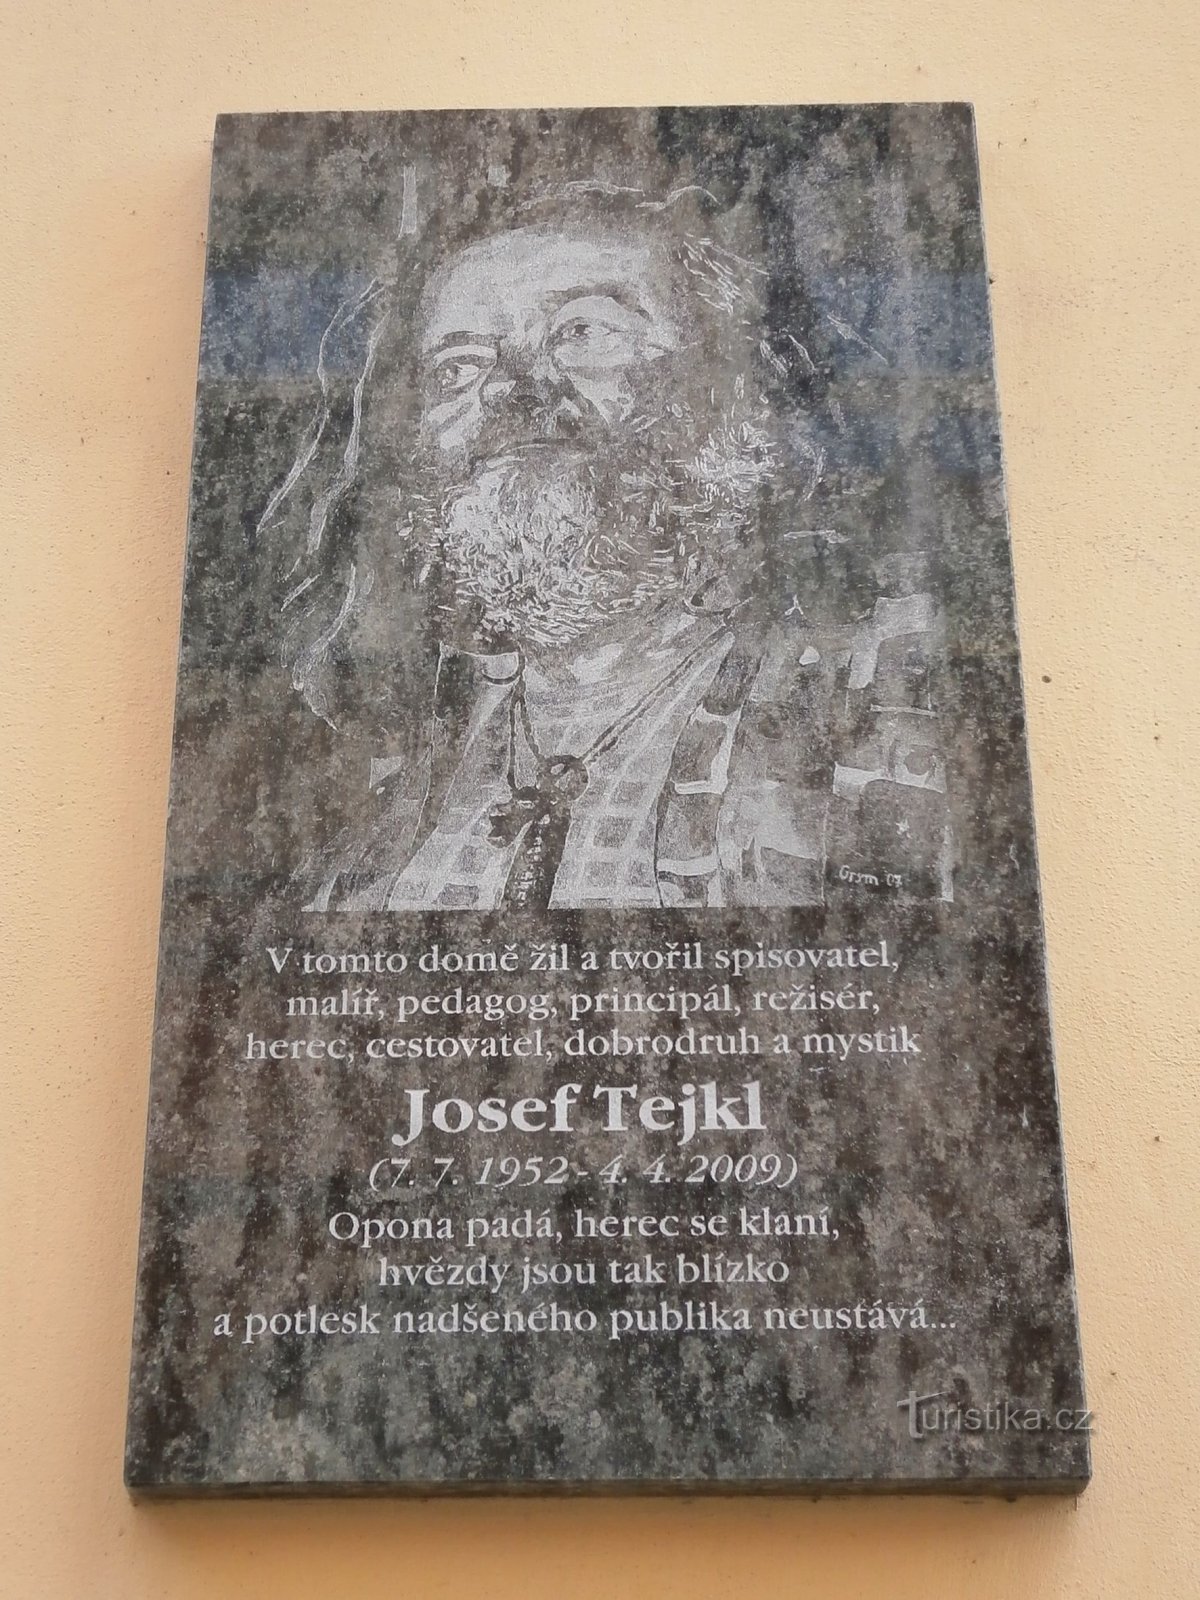 Placa comemorativa de Josef Tejkl (Hradec Králové, 15.7.2013)